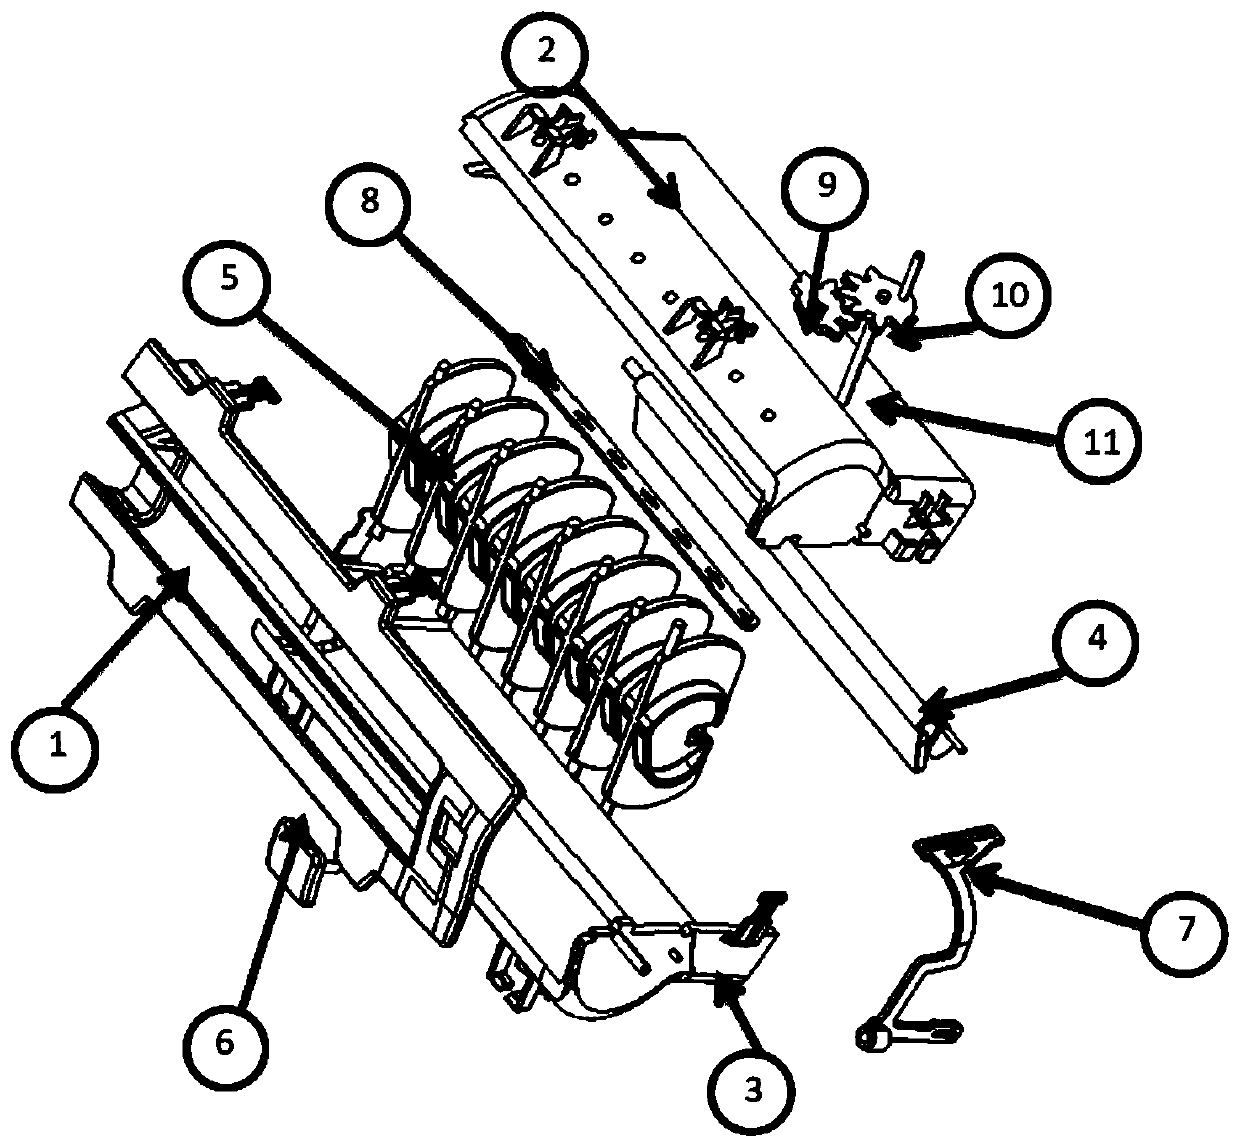 Air outlet mechanism